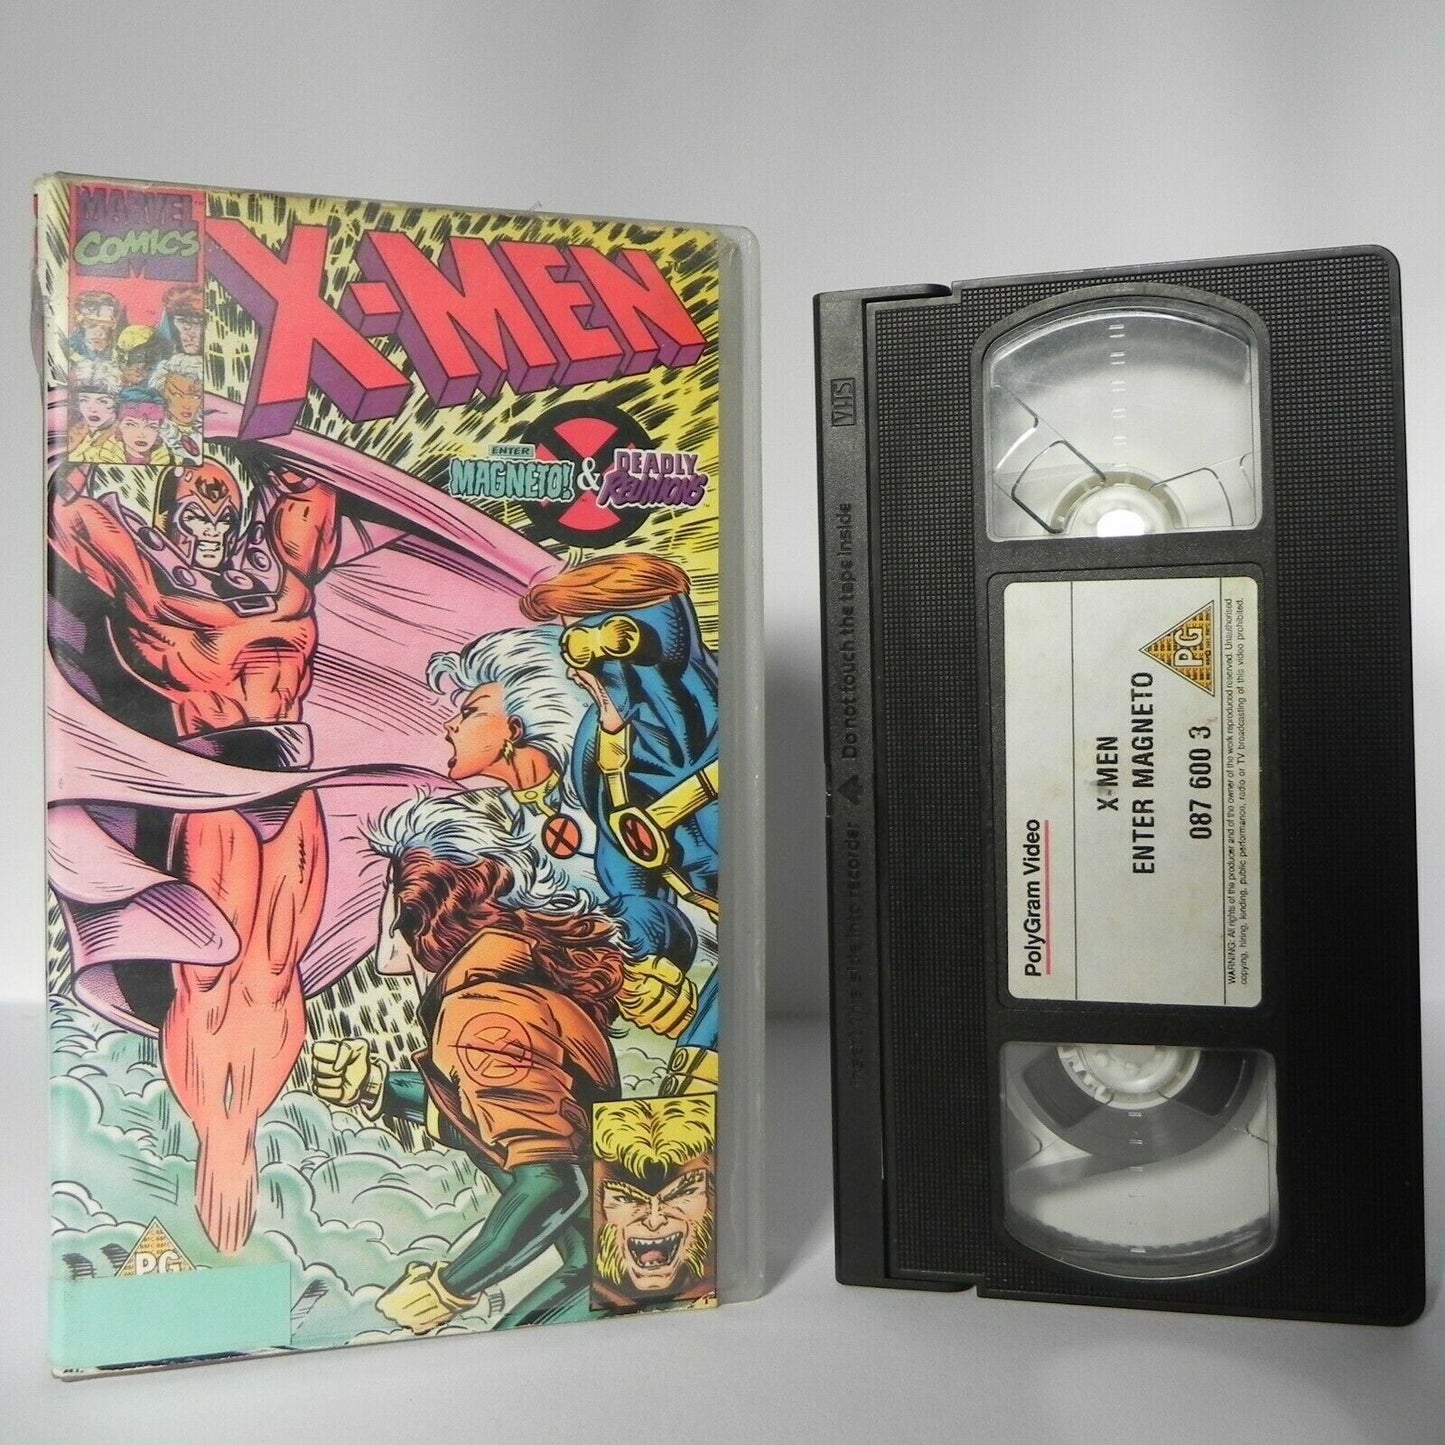 X-Men: Enter Magneto! / Deadly Reunions - Animated Action - Children's - Pal VHS-